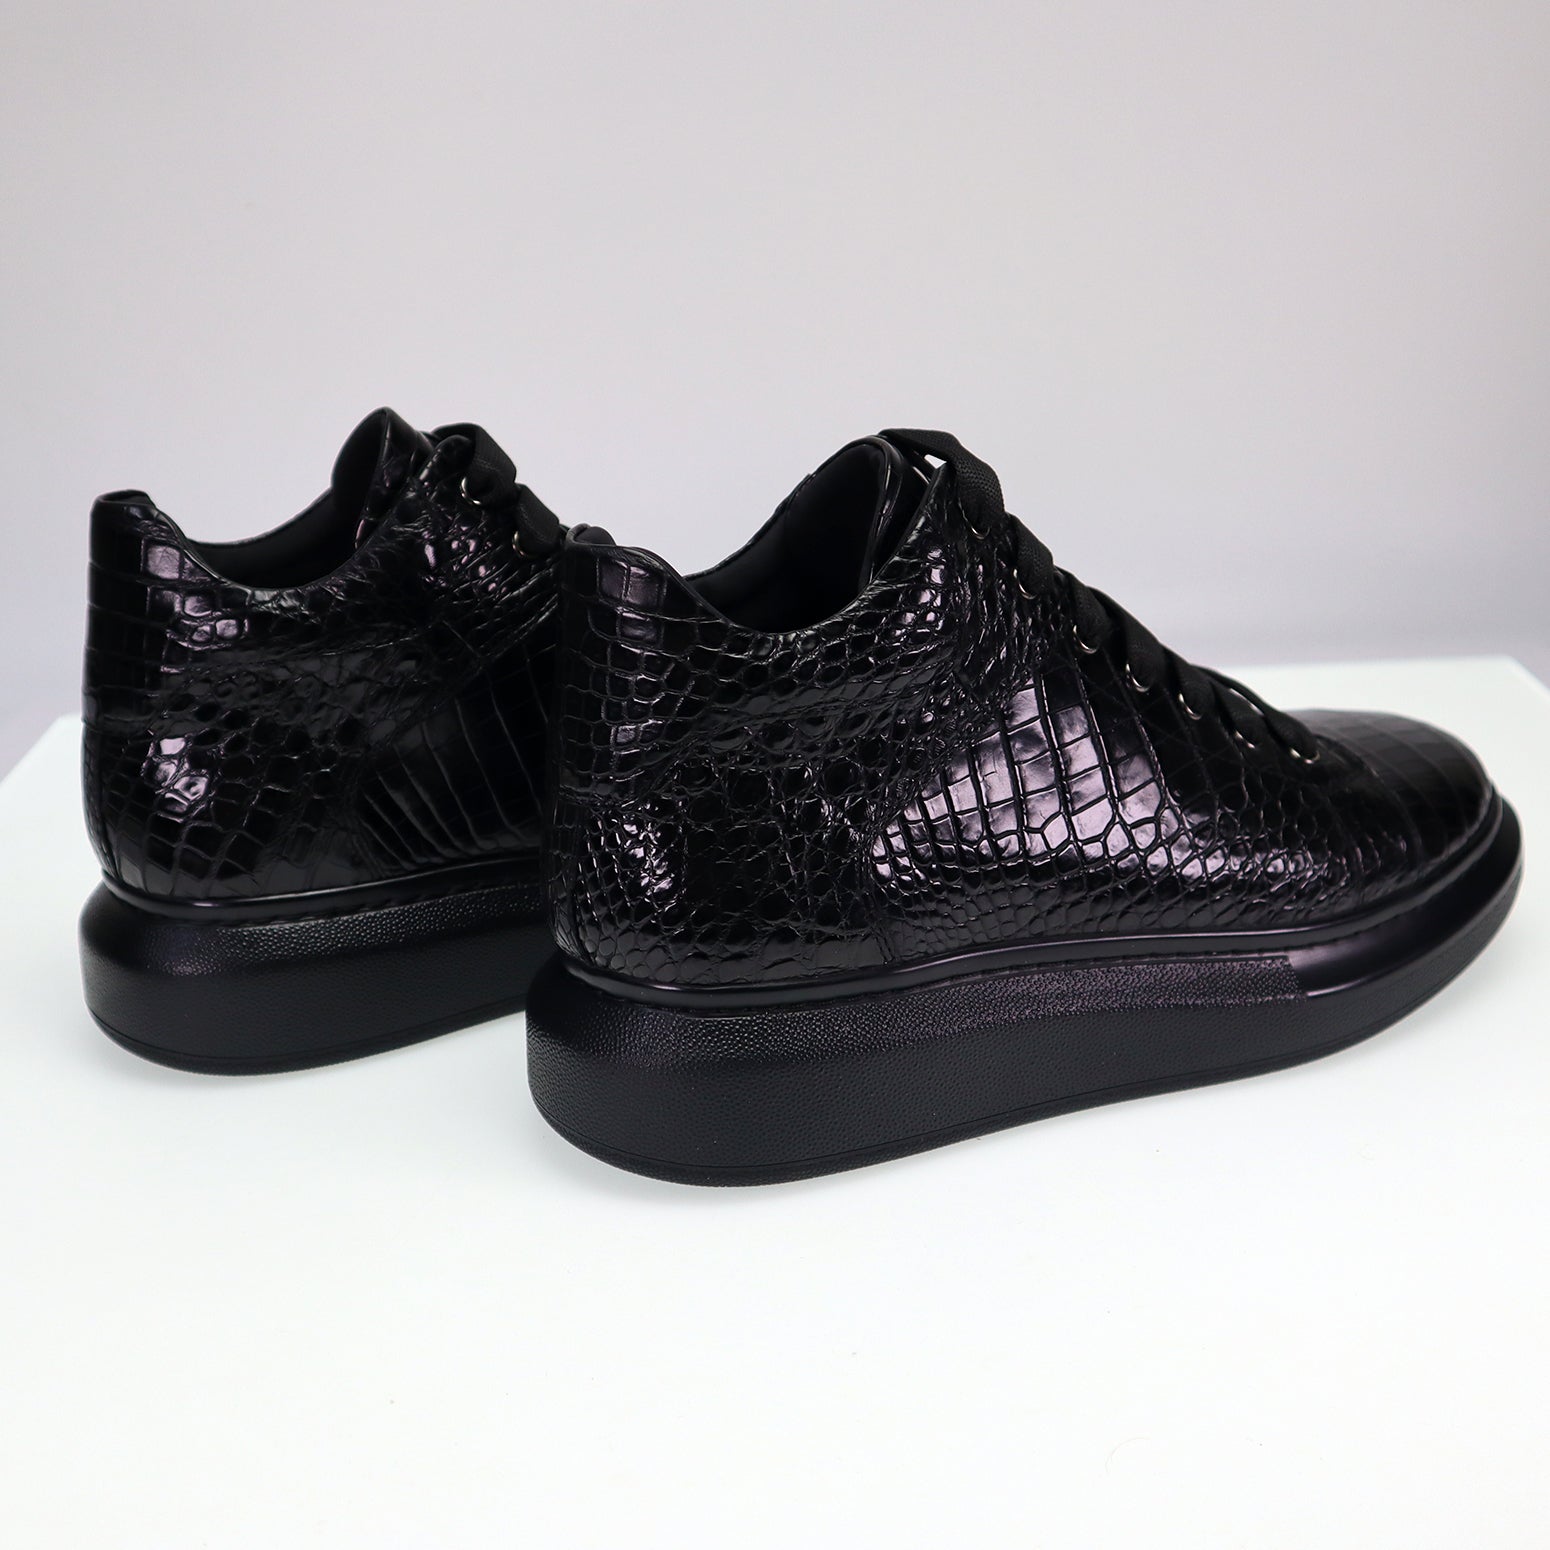 Men's Shoes Genuine Crocodile Alligator Skin Leather Men Sneakers Handmade Black Size 7 - Size 11US #8685